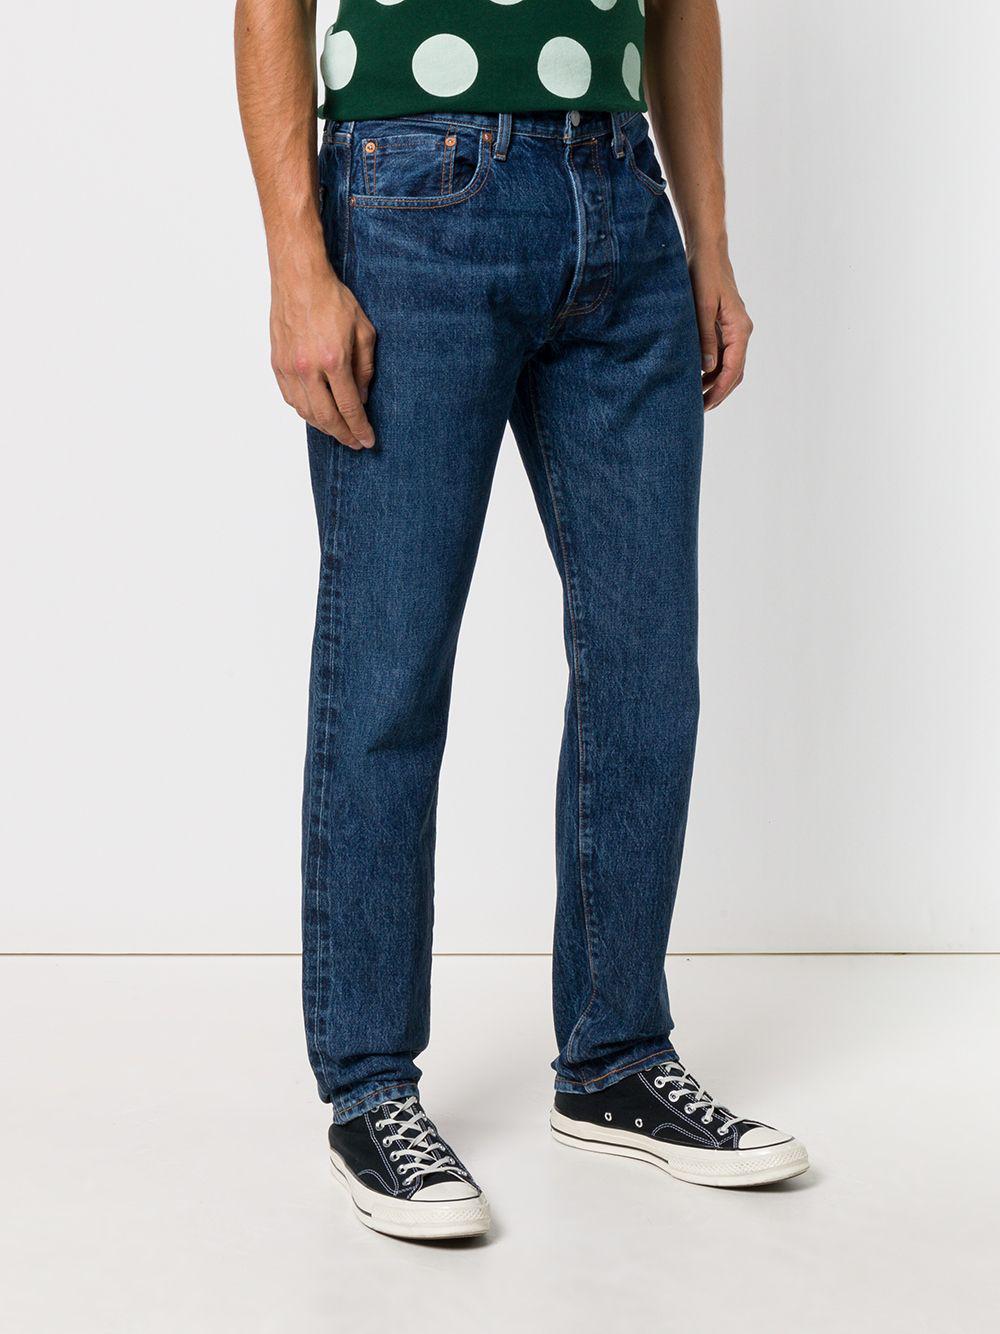 Levi's Denim 501 Taper Jeans in Blue for Men - Lyst